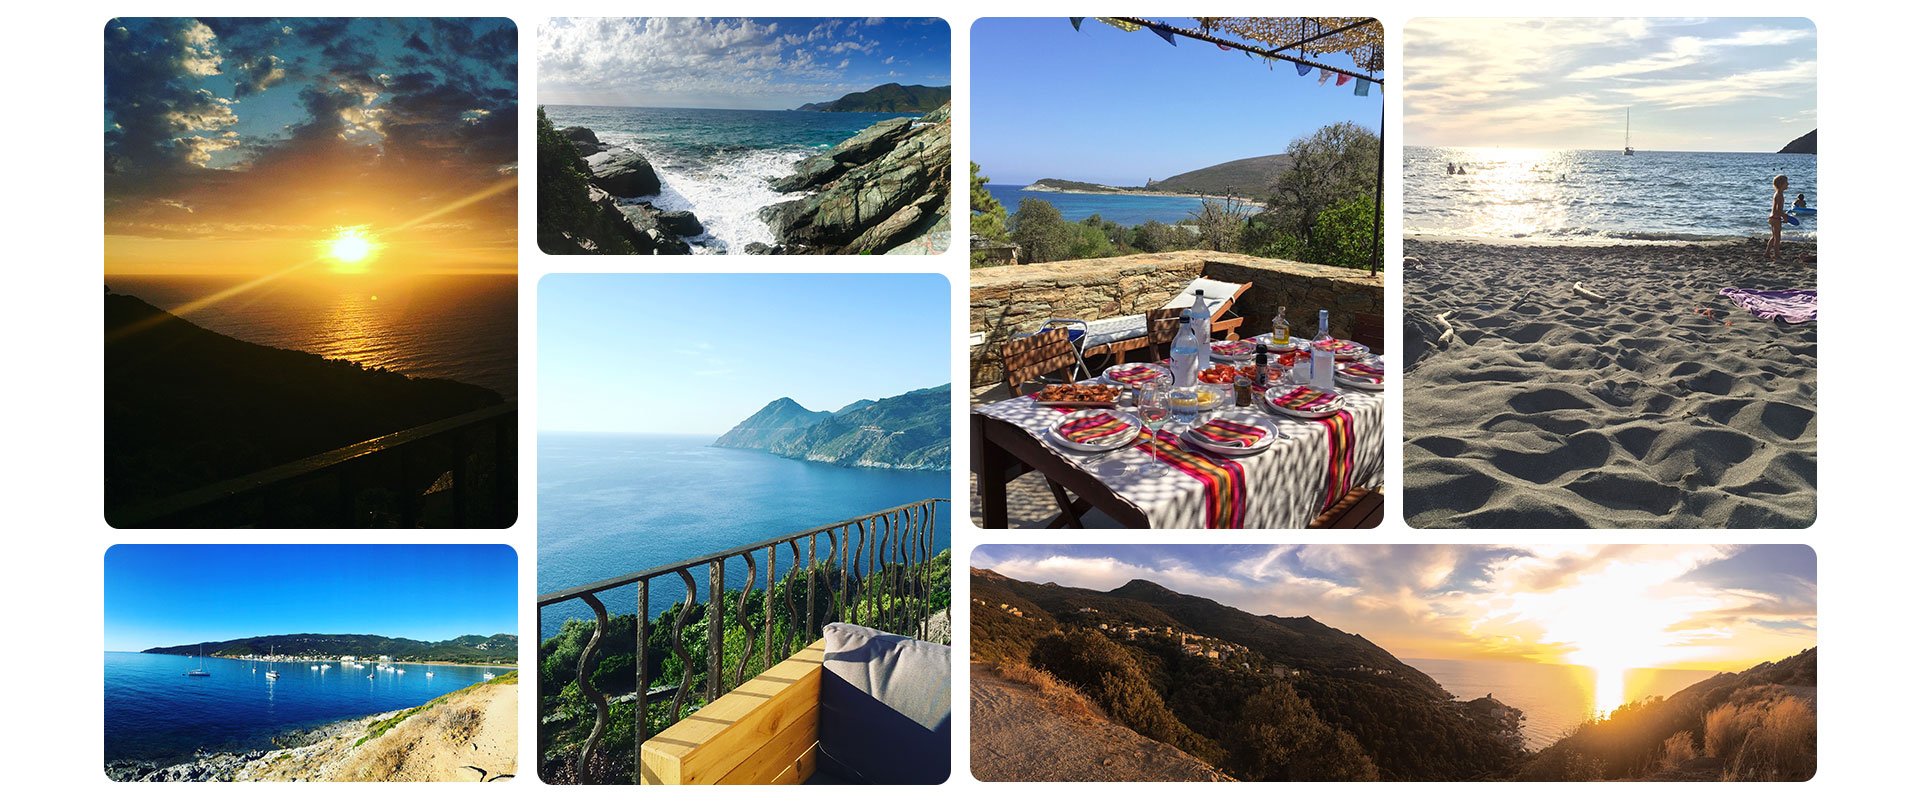 Saisonvermietung in Cap Corse (Oberkorsisch) von Erbalunga nach Canari, vorbei an Macinaggio, Centuri, Pino, Pietracorbara ...